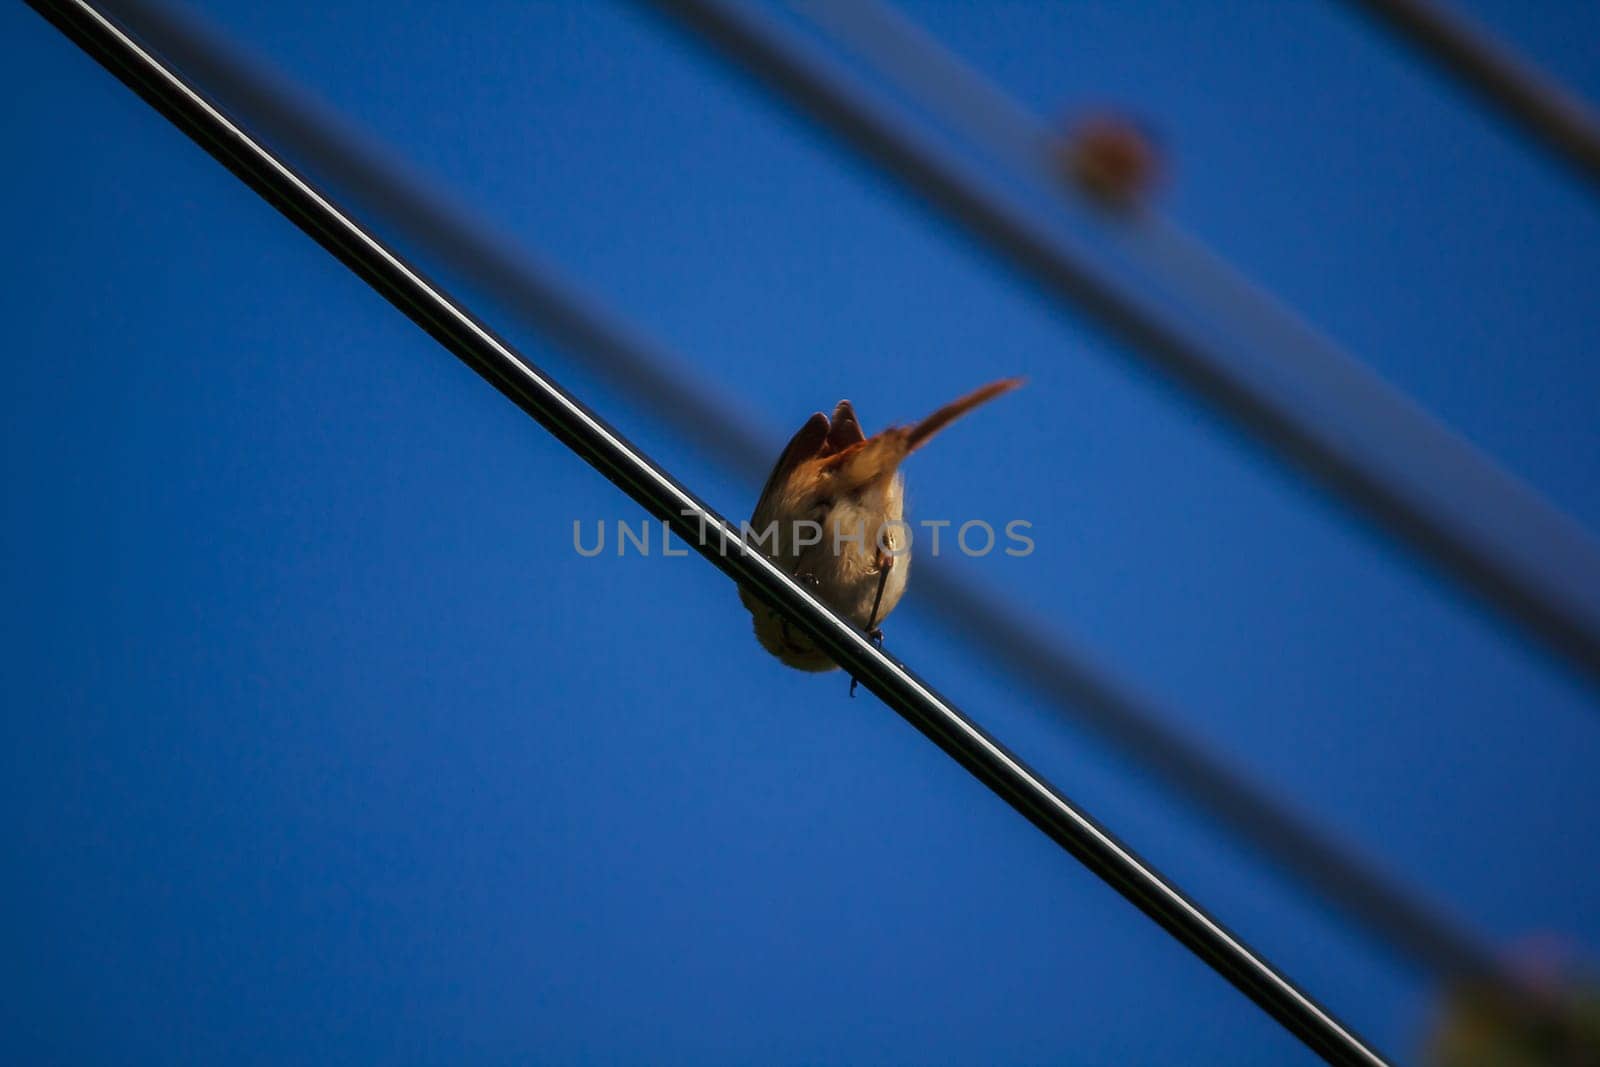 fulvetta (bird) on the power cord In Doi Inthanon National Park, Thailand